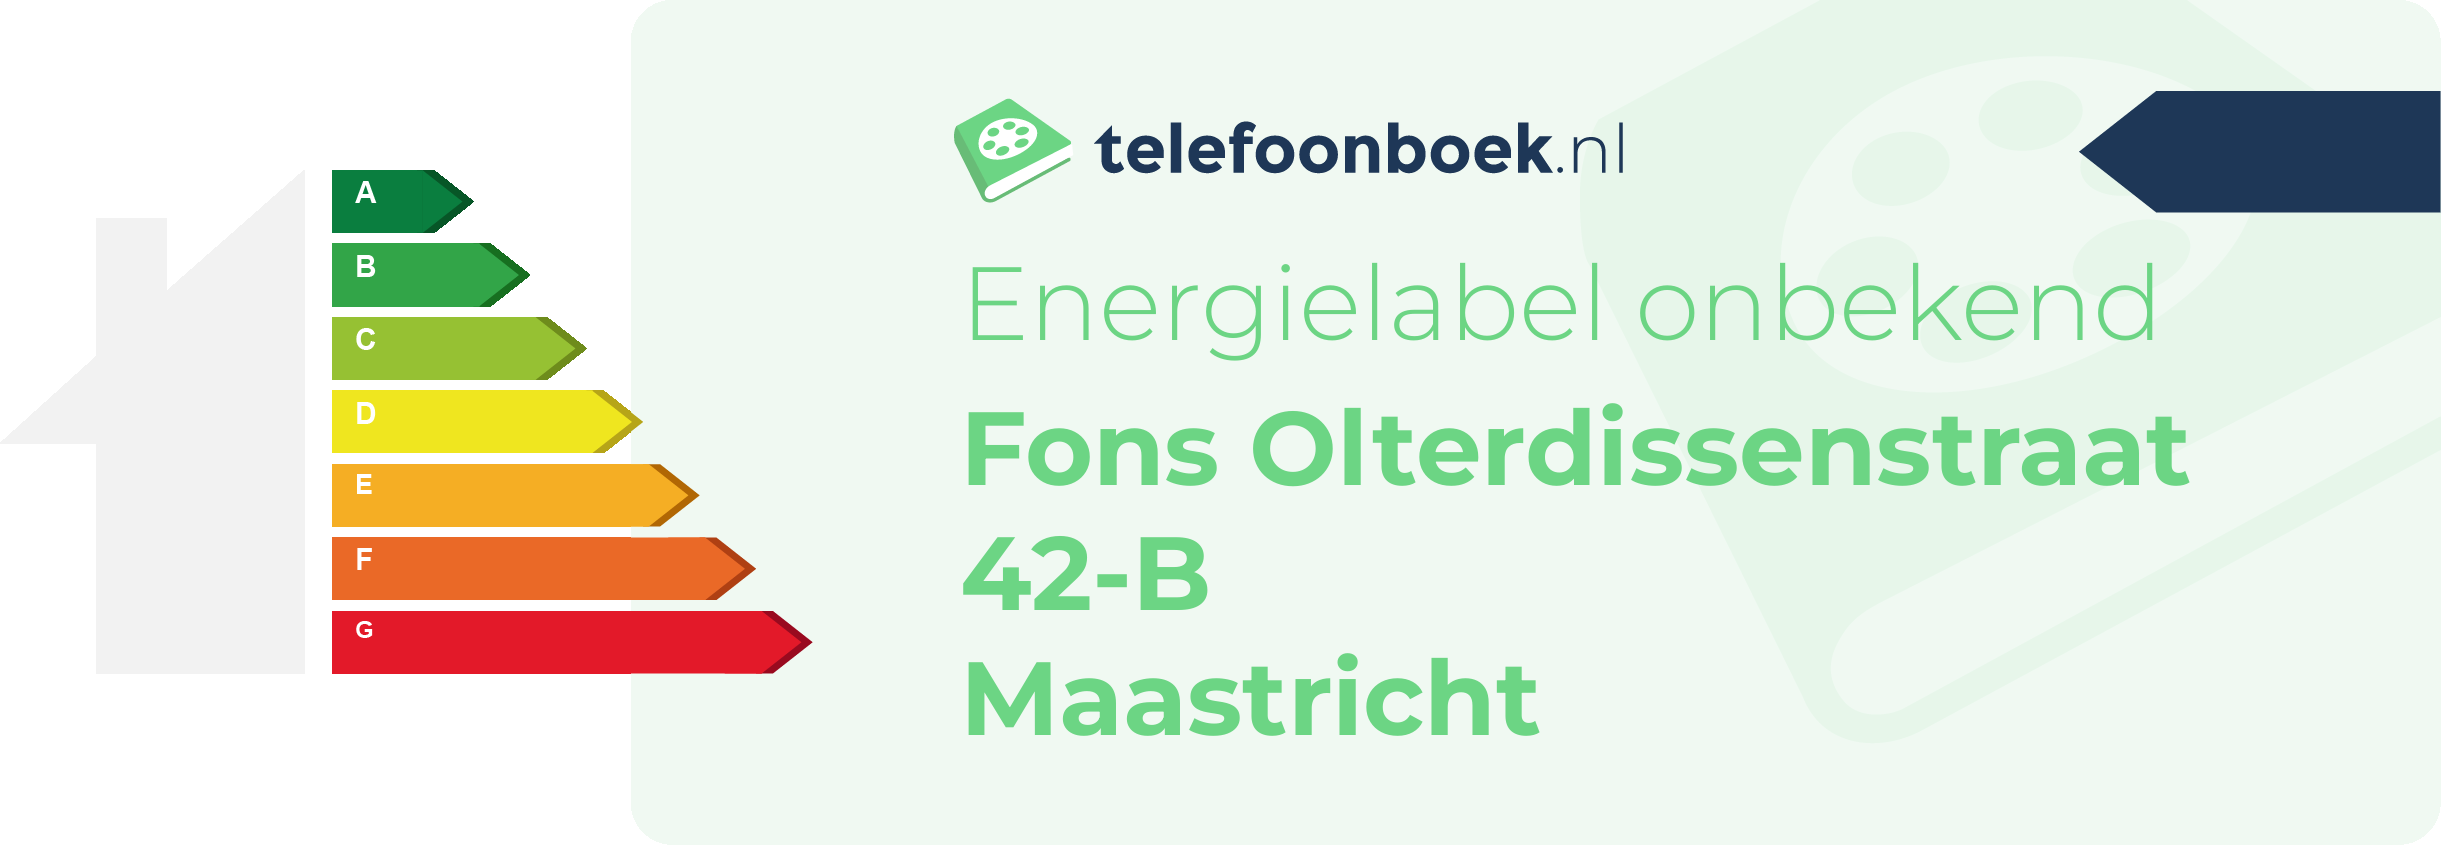 Energielabel Fons Olterdissenstraat 42-B Maastricht